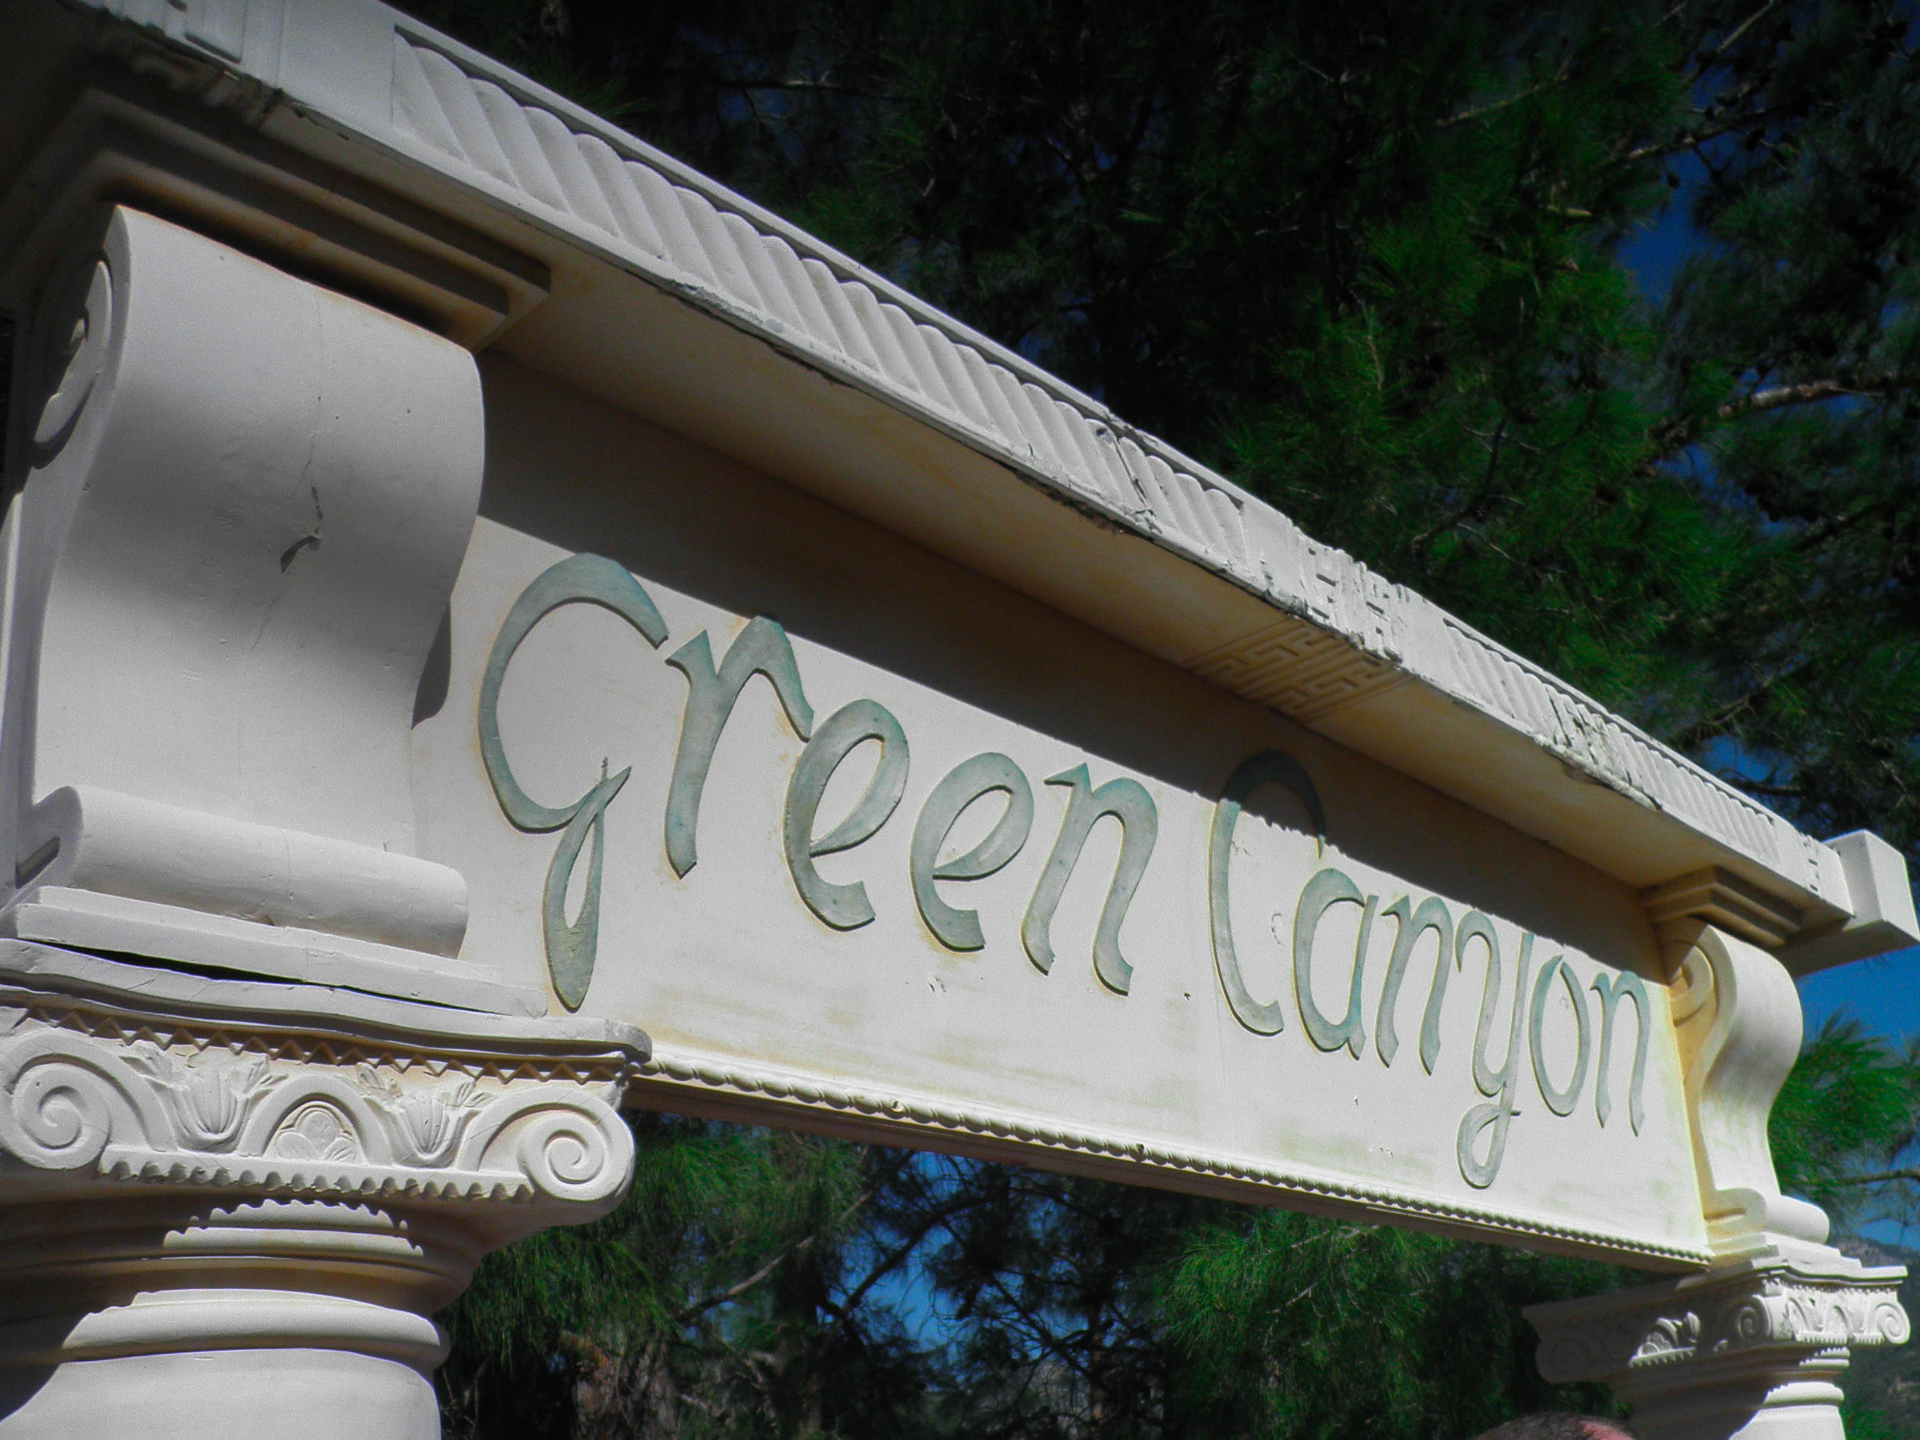 Entrance to Green Canyon